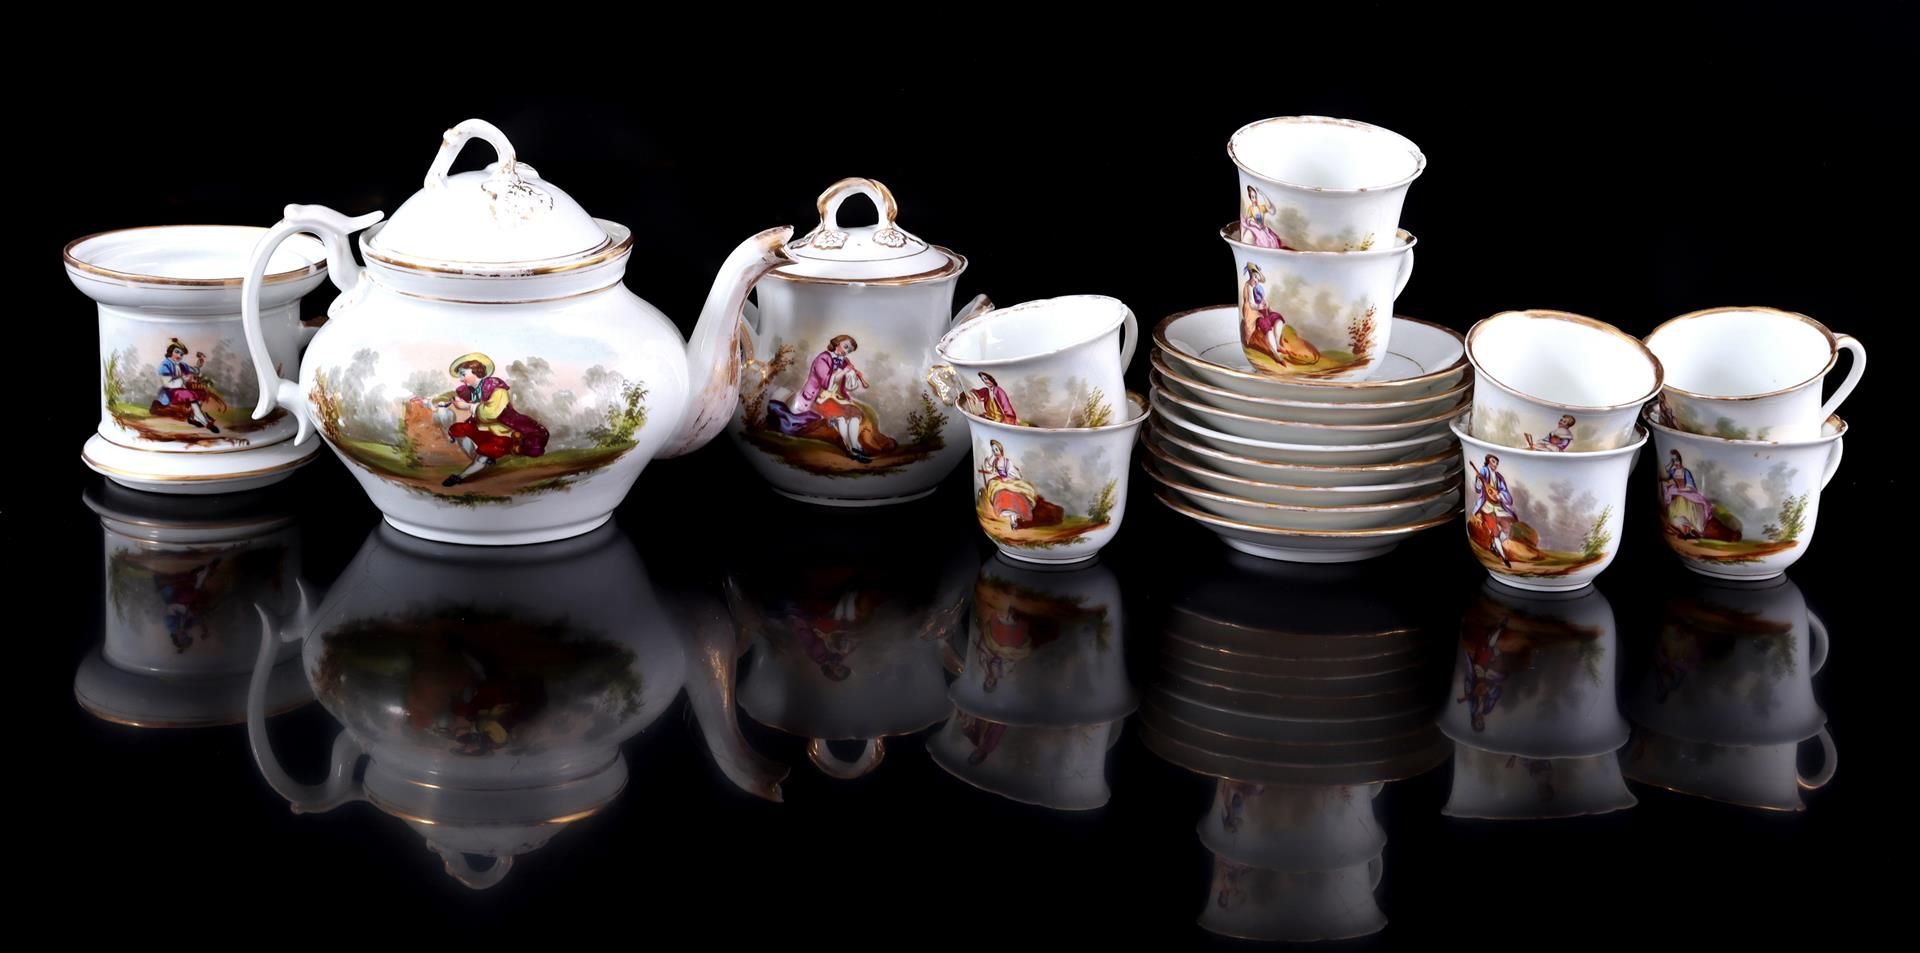 11-piece porcelain tea set with gold accents and various decors